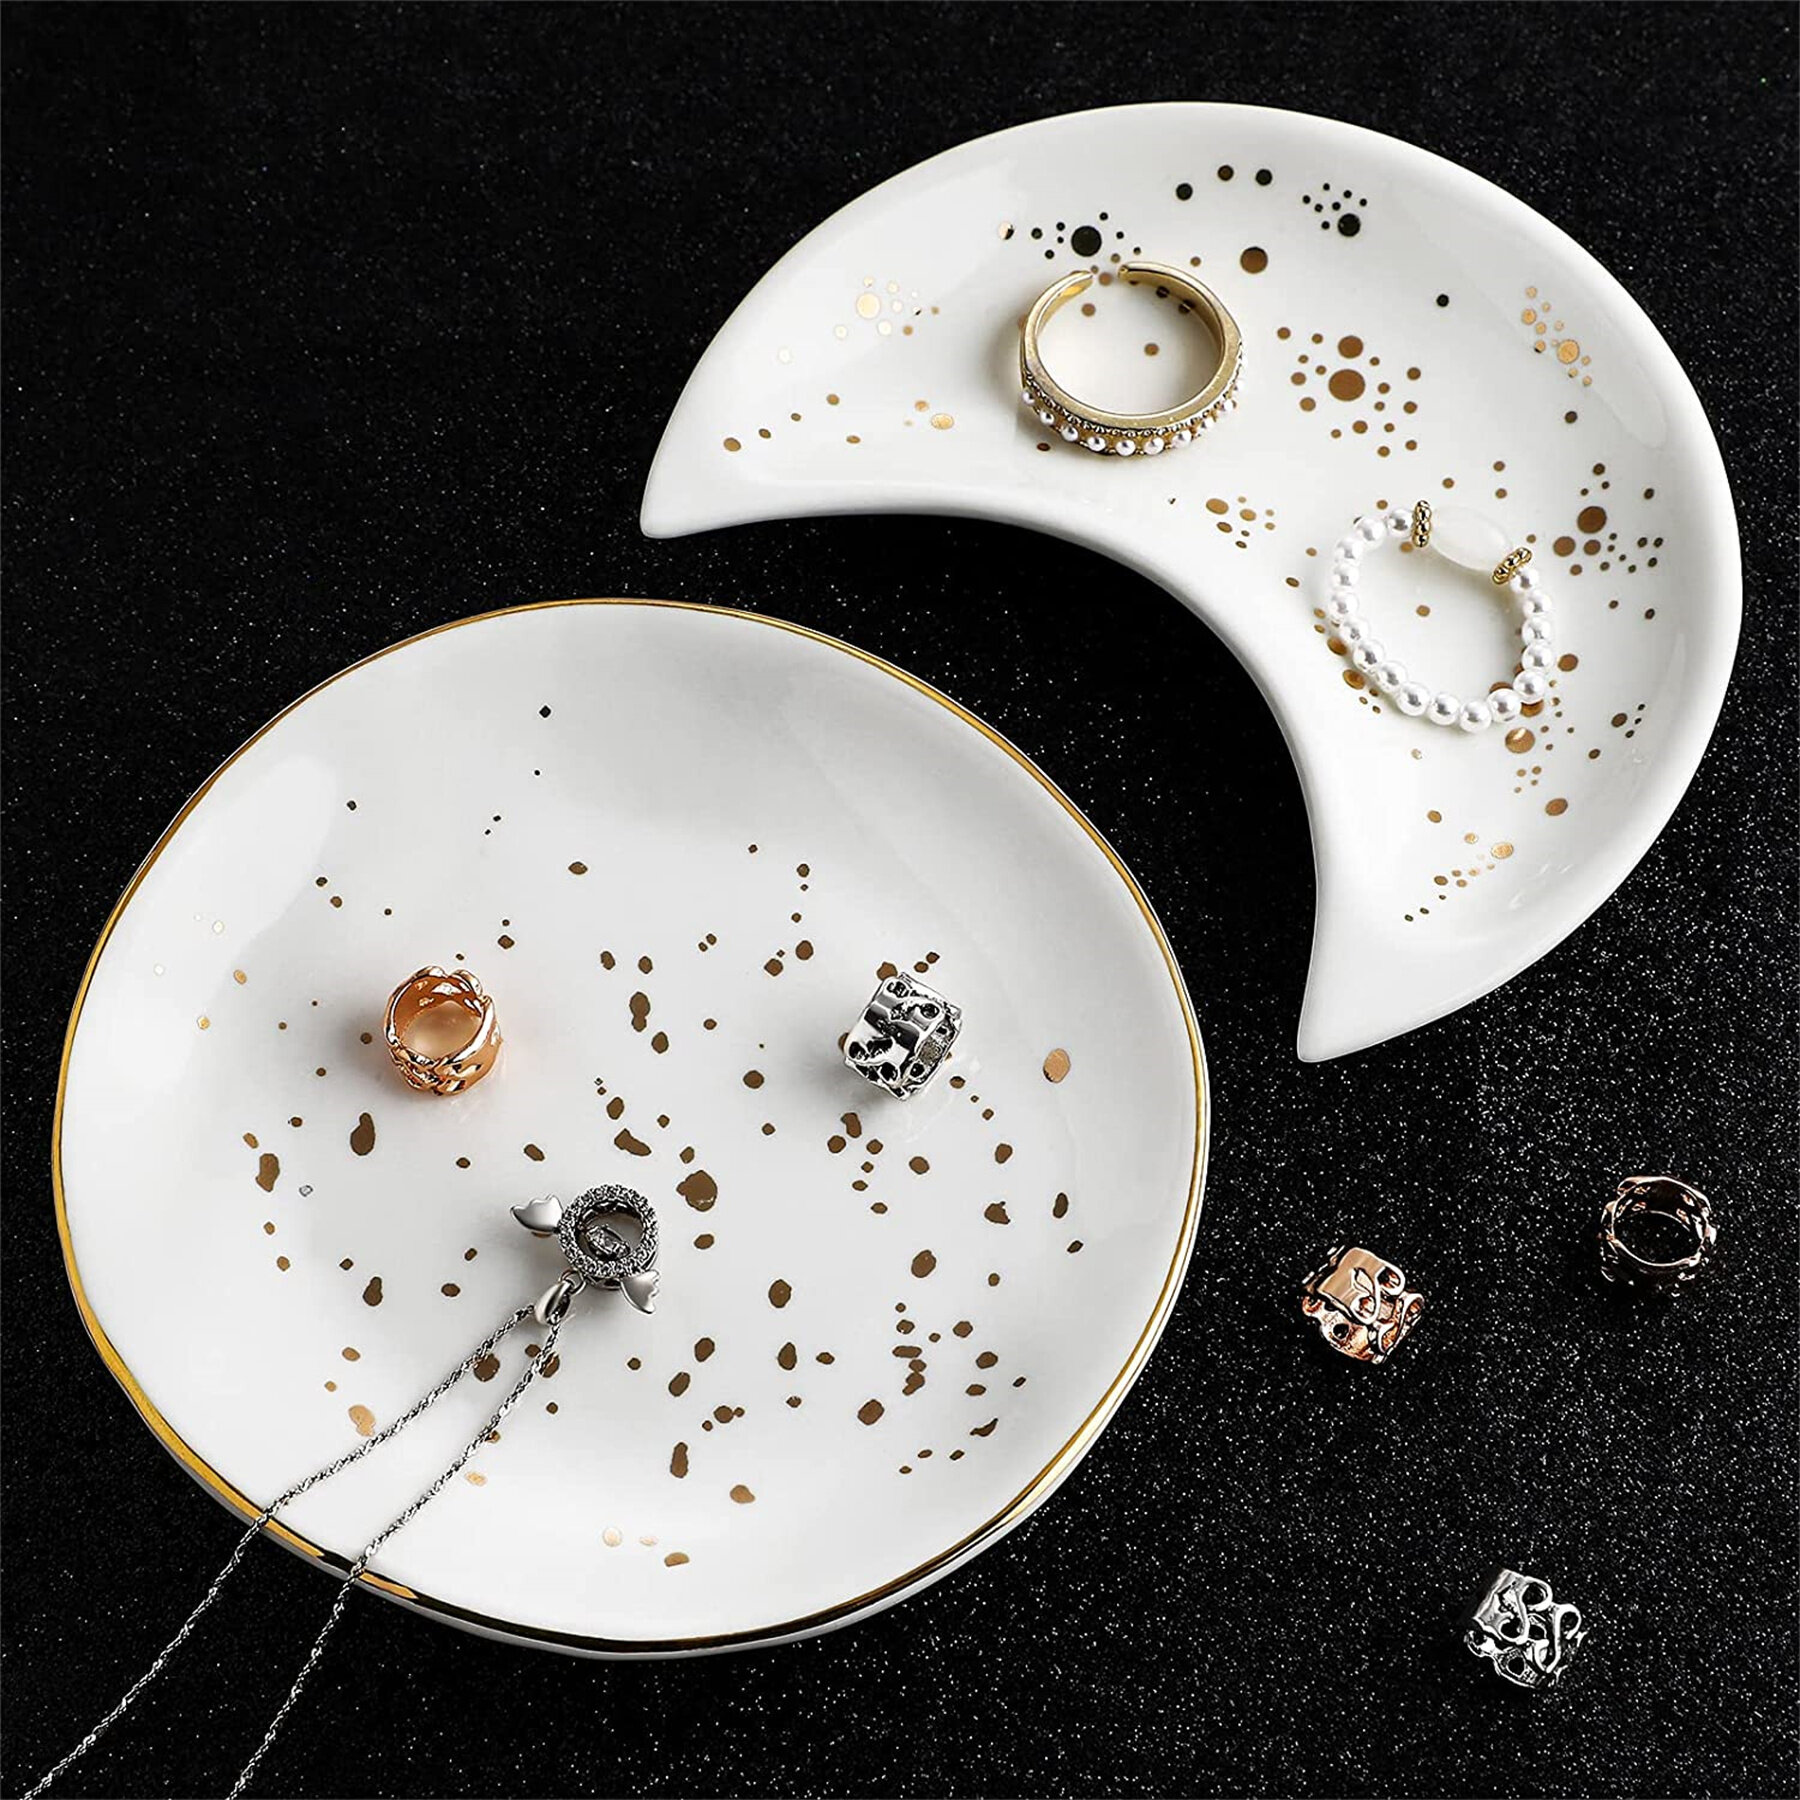 Jewelry Tray Dish Moon Shape Decorative Ceramic Trinket Dish Ring Dish Desk Organizer Accessories for Home Decor Blue and Black